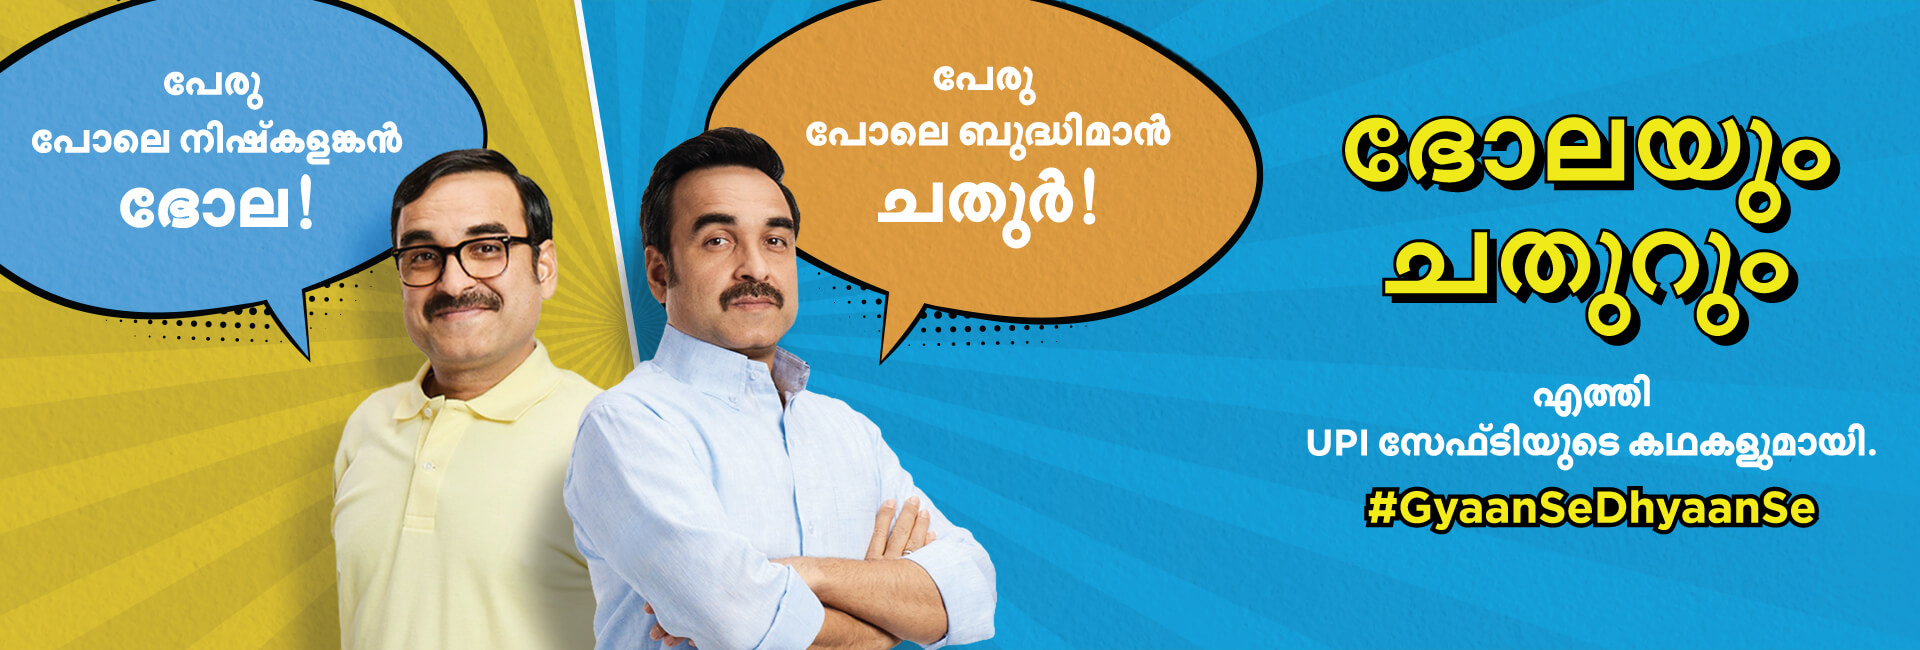 UPI Safety Campaign Malayalam